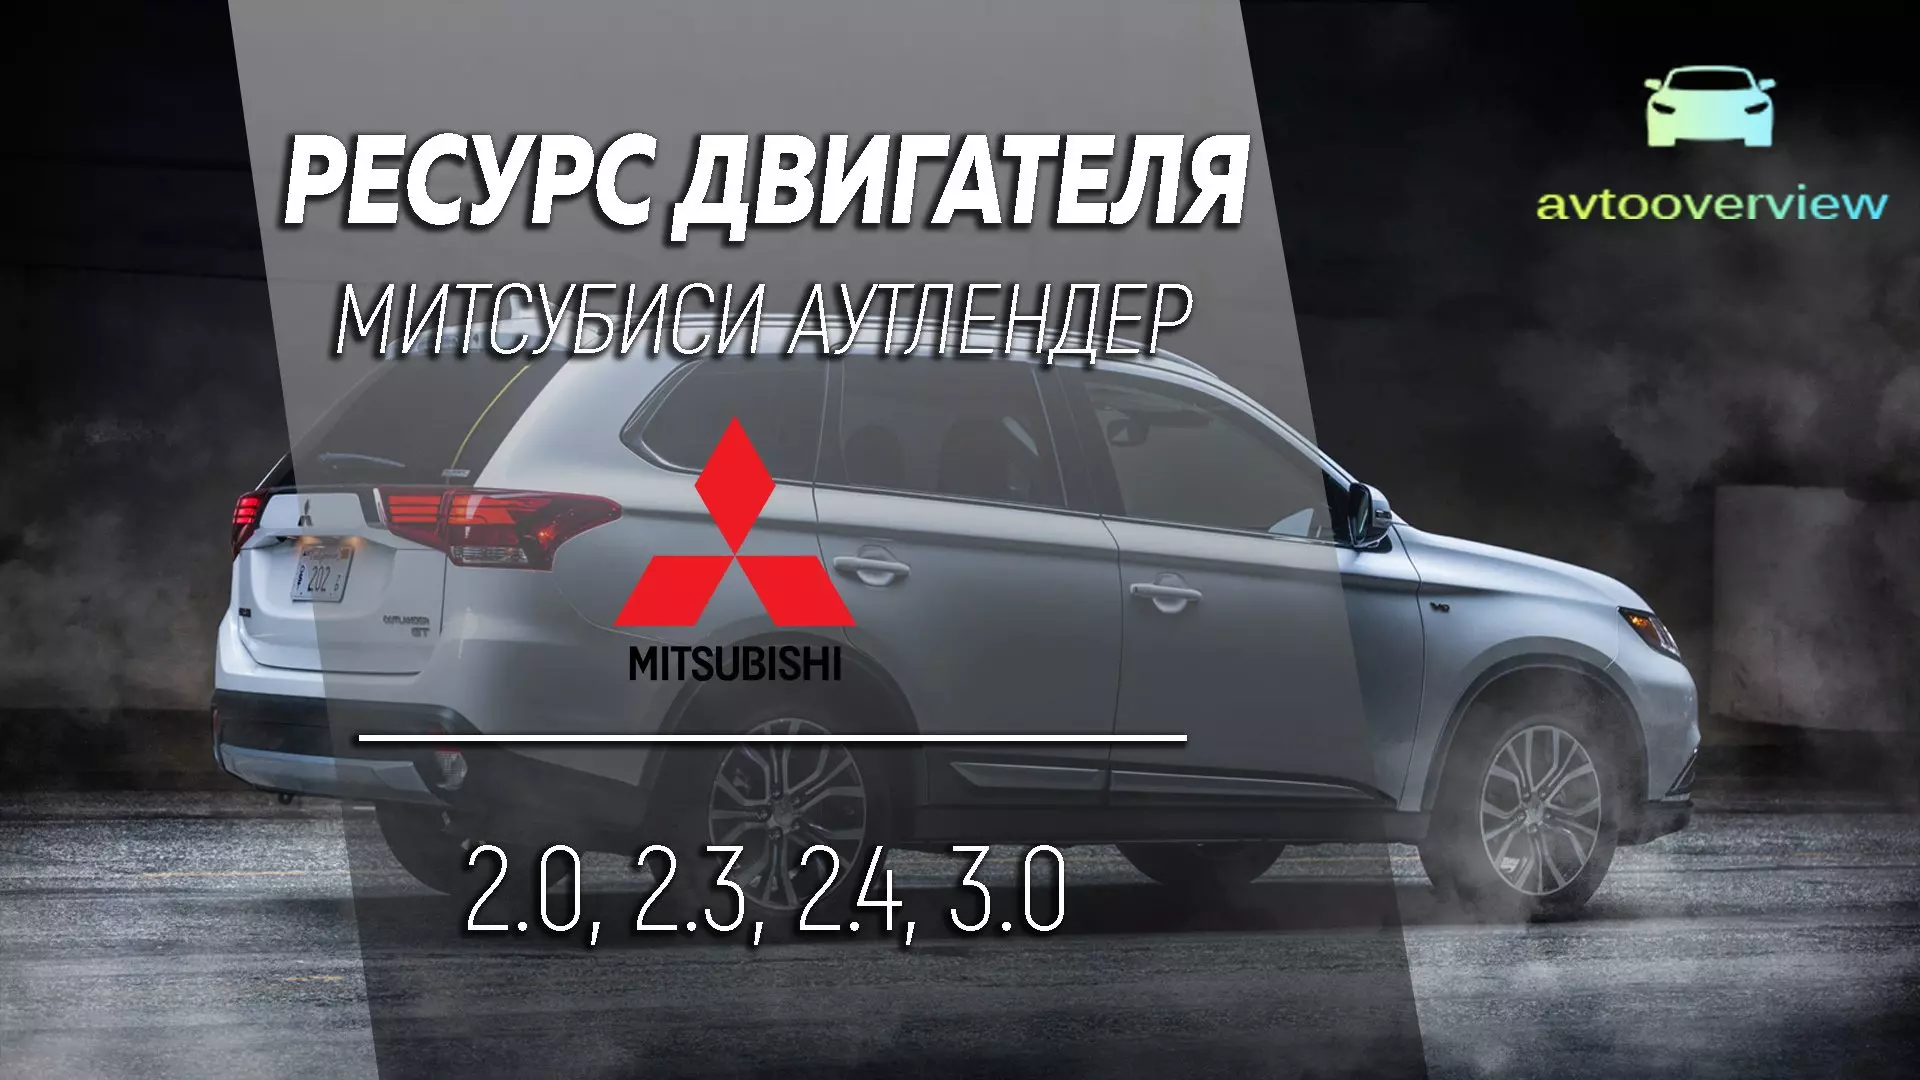 Ресурс двигателя Mitsubishi Outlander 2.0, 2.3, 2.4, 3.0